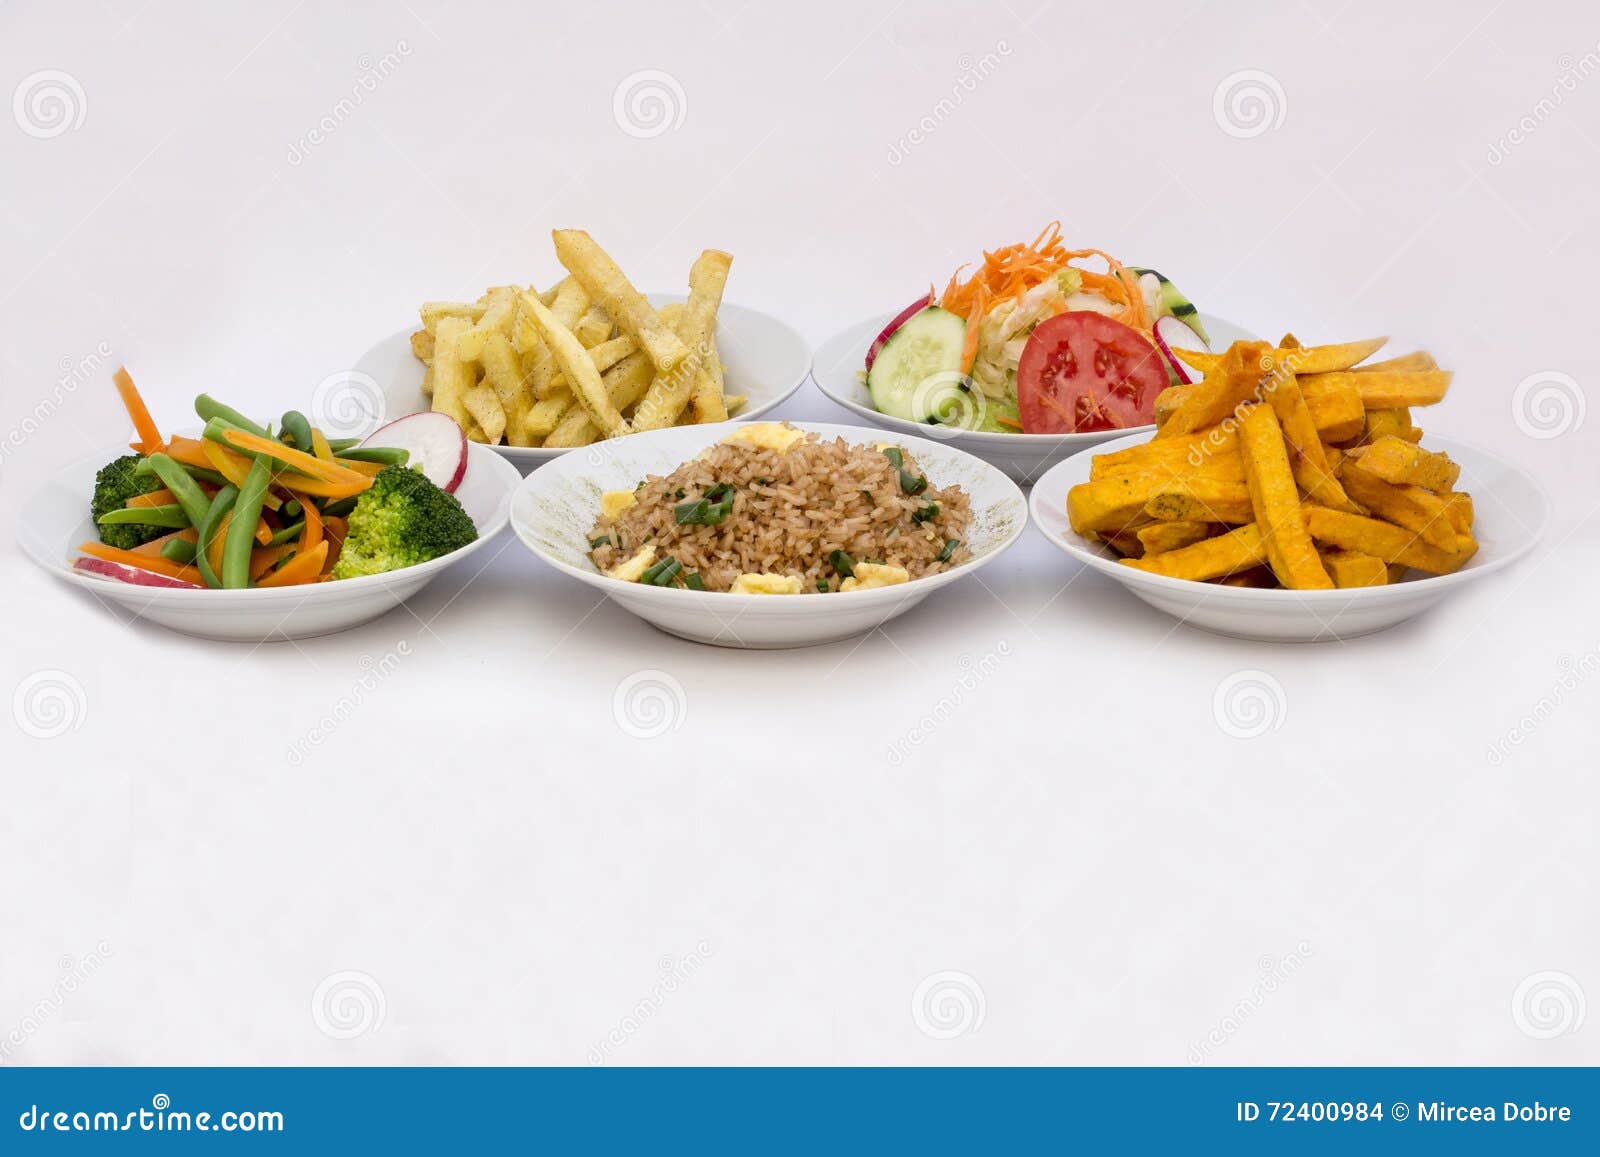 5 different types of salads: sweet potatoes (camote o kumara), fried rice (arroz chaufa), potatoes